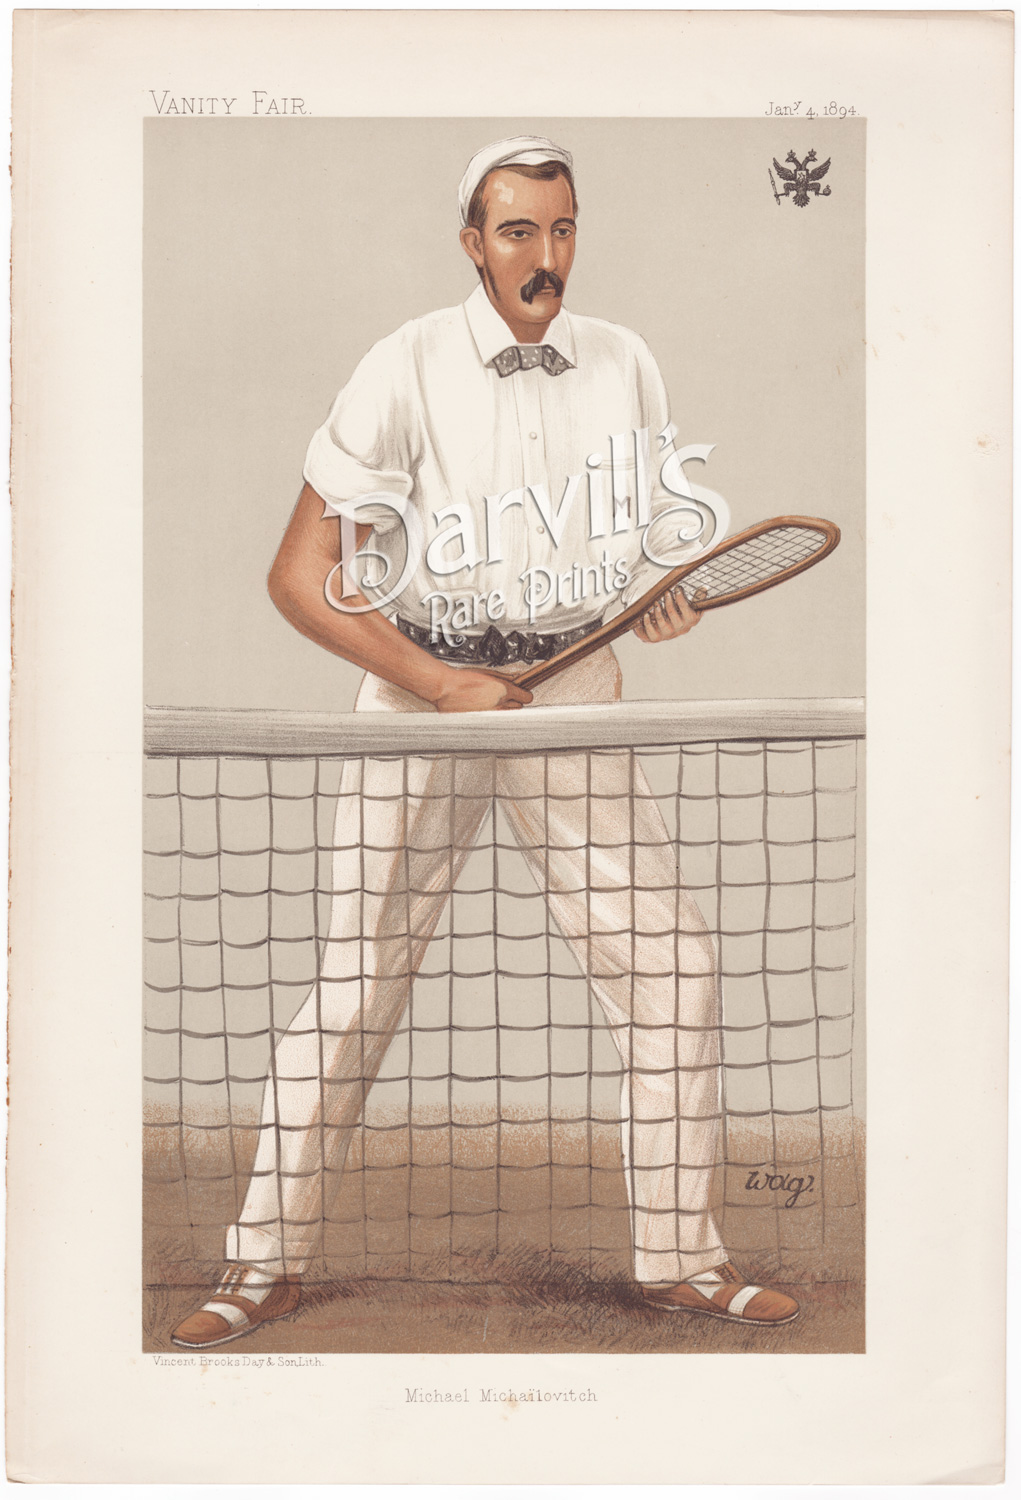 The Grand Duke Michael Michailovitch of Russia 1894 tennis player